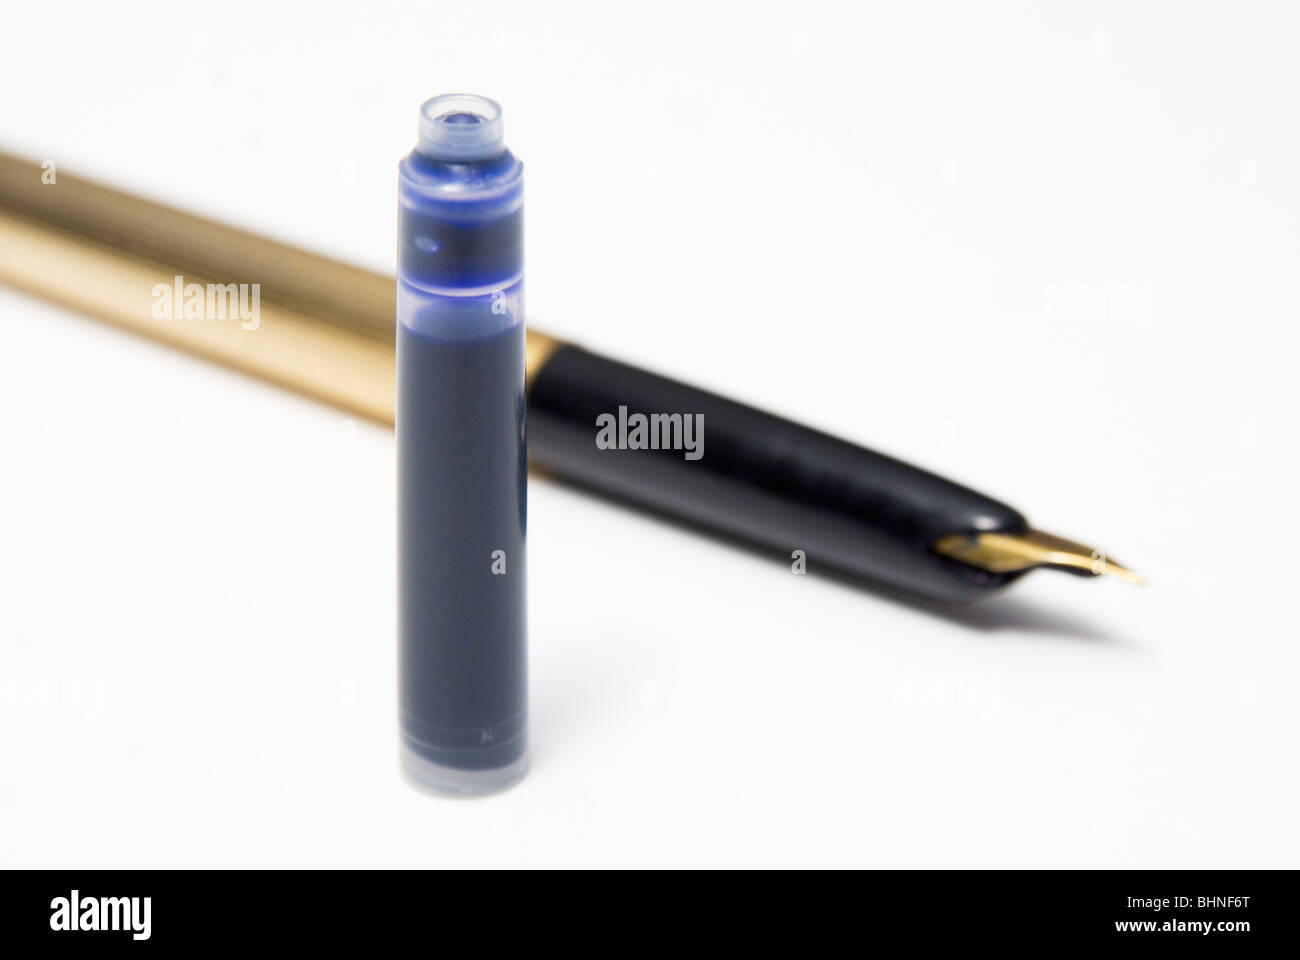 Penna stilografica e cartuccia Foto stock - Alamy